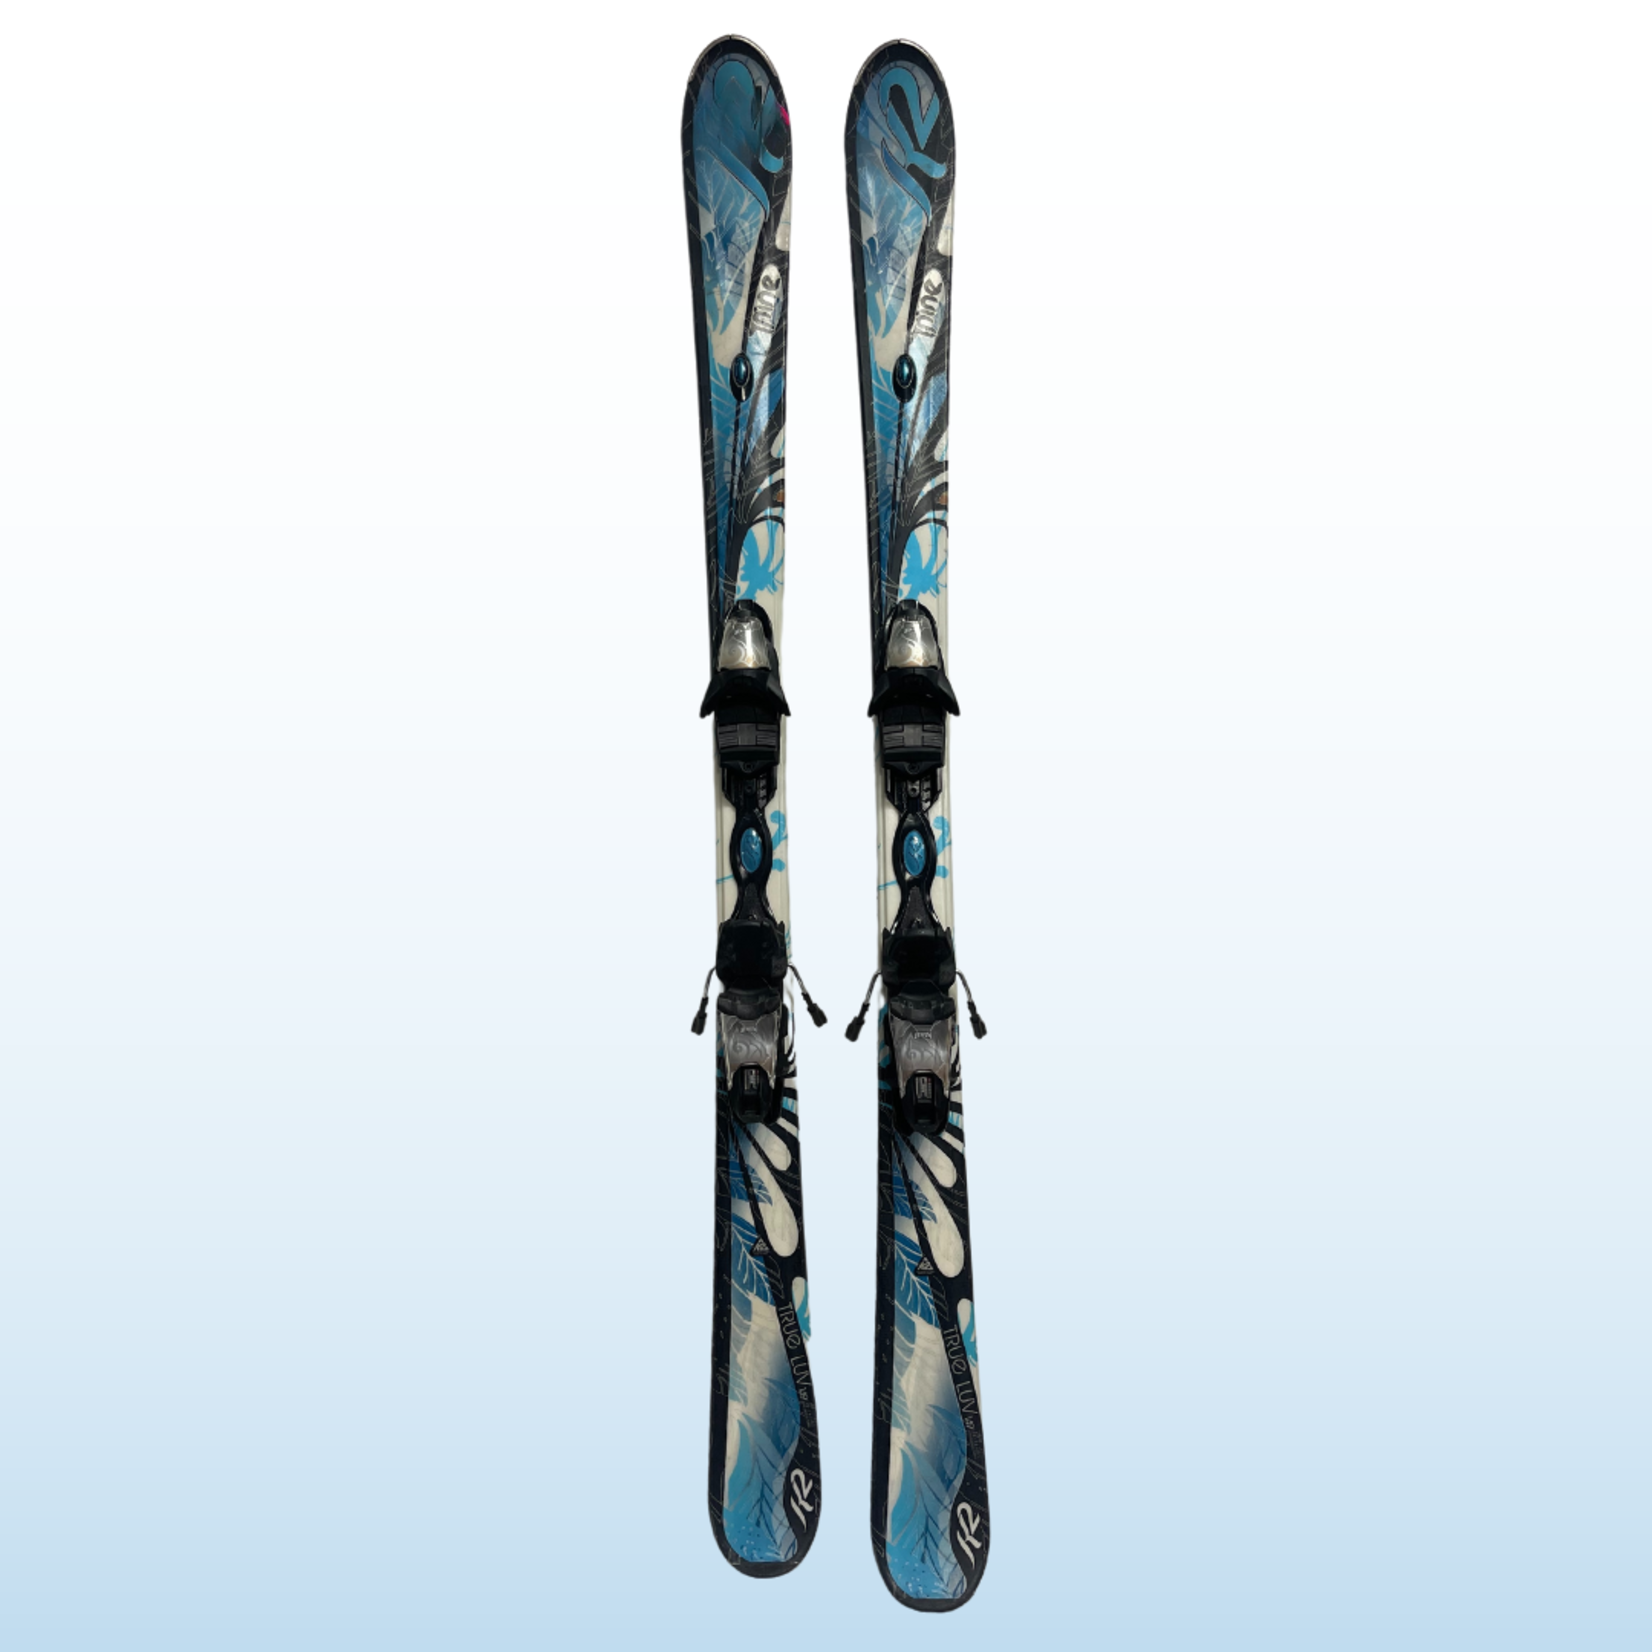 K2 K2 True Luv Women's Skis 149cm